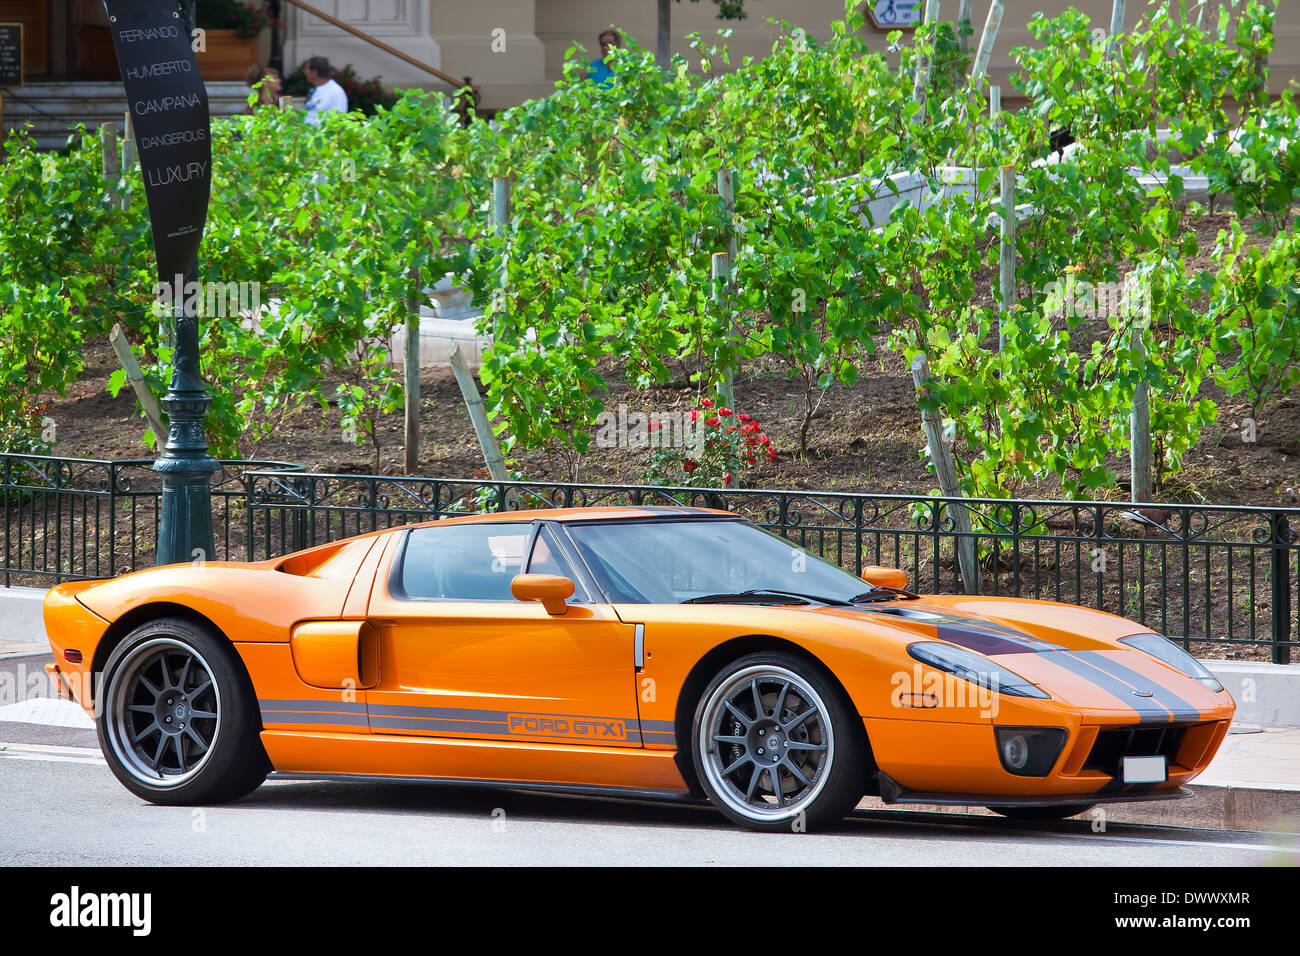 Luxury car on the street in Monte Carlo, Monaco. Stock Photo